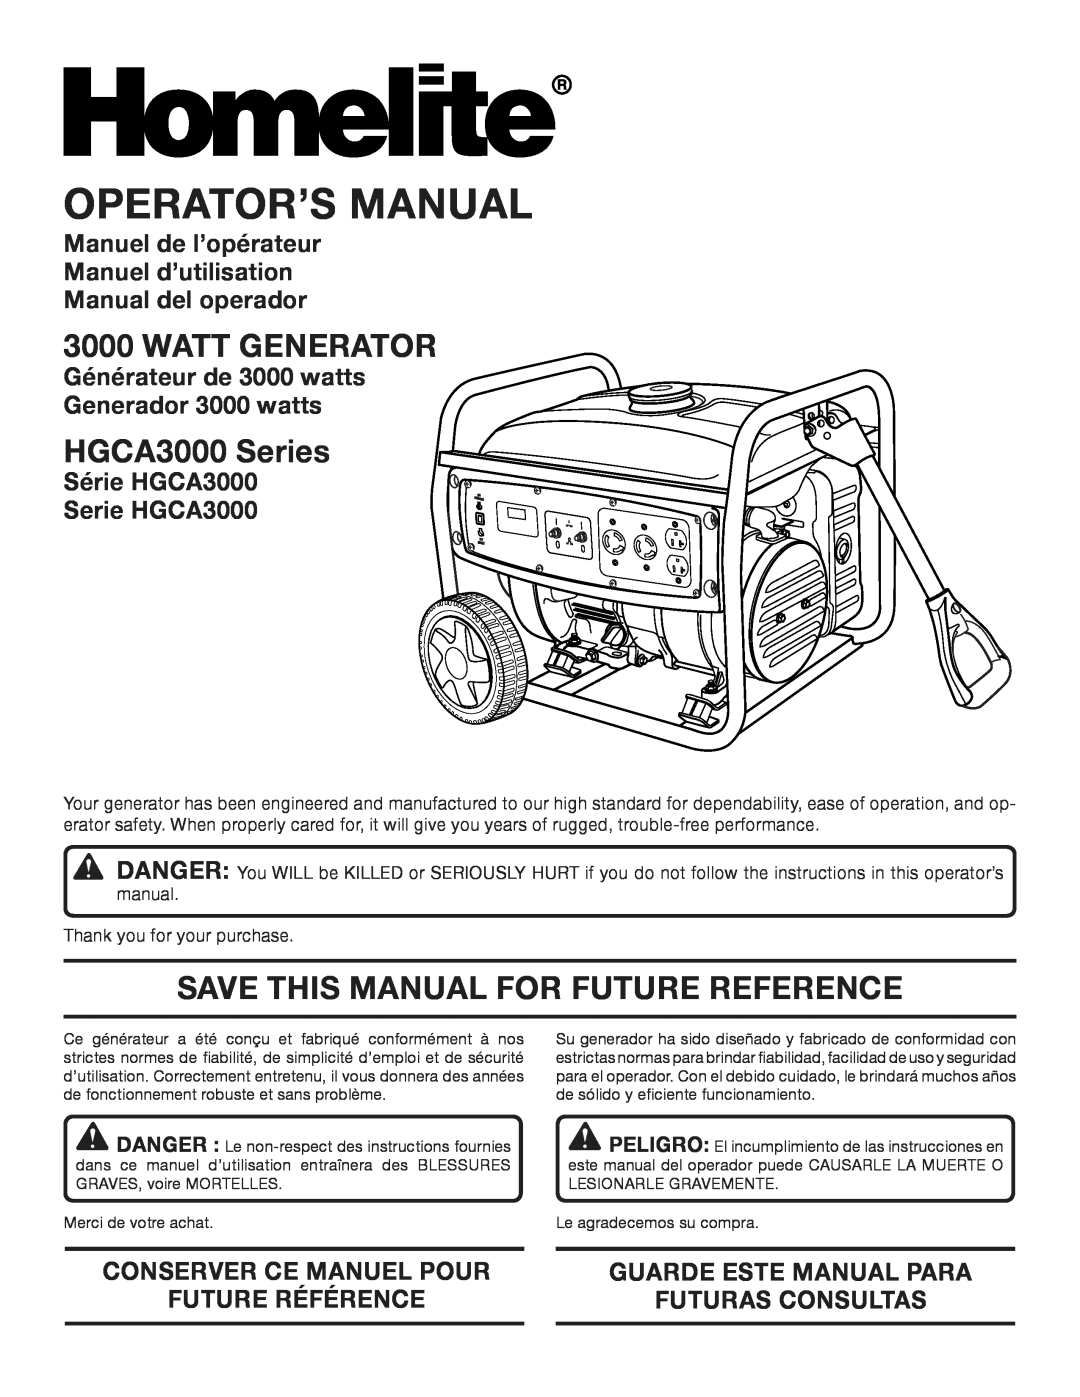 Homelite manuel dutilisation Watt Generator, HGCA3000 Series, Save This Manual For Future Reference, Operator’S Manual 